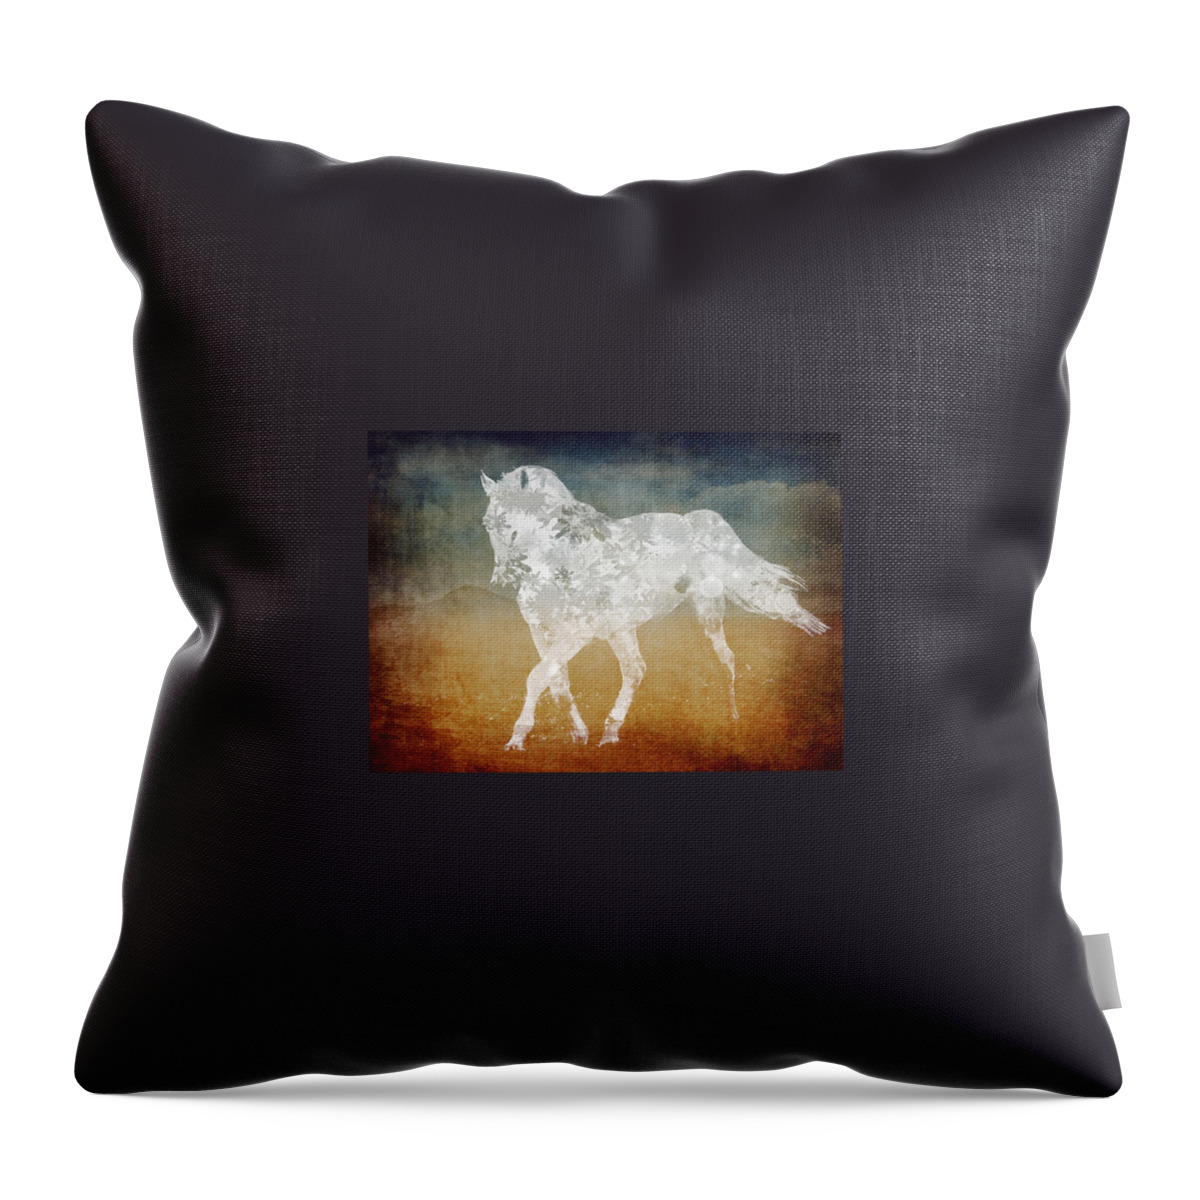 Magical Throw Pillow featuring the digital art Magical Horse 15 by Eileen Backman